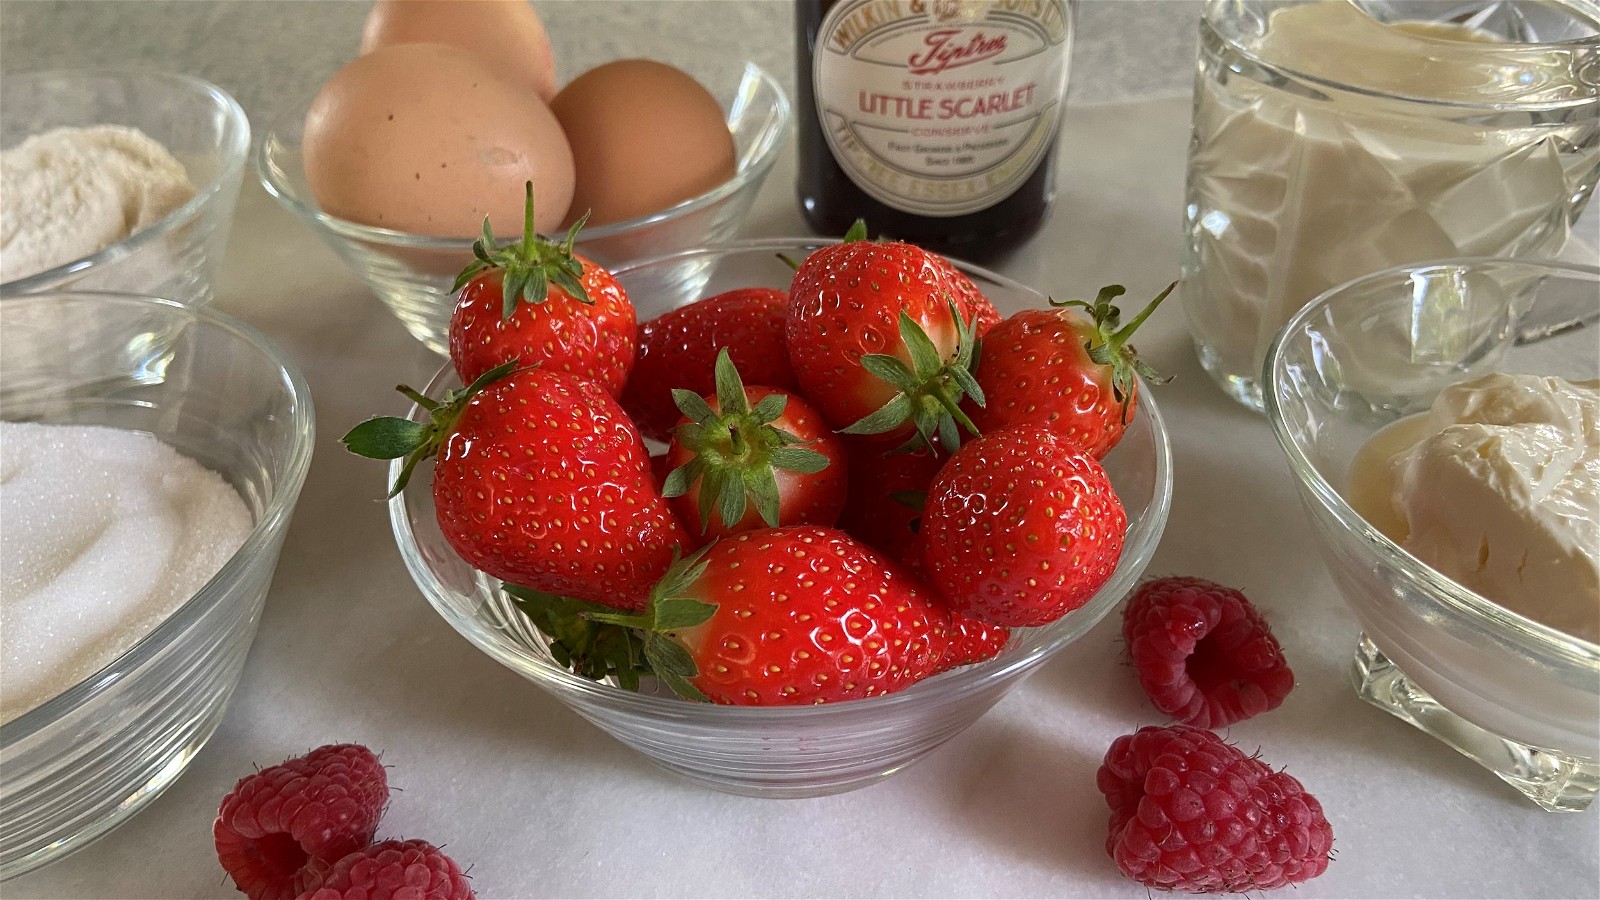 Image of Jubilee strawberry dessert